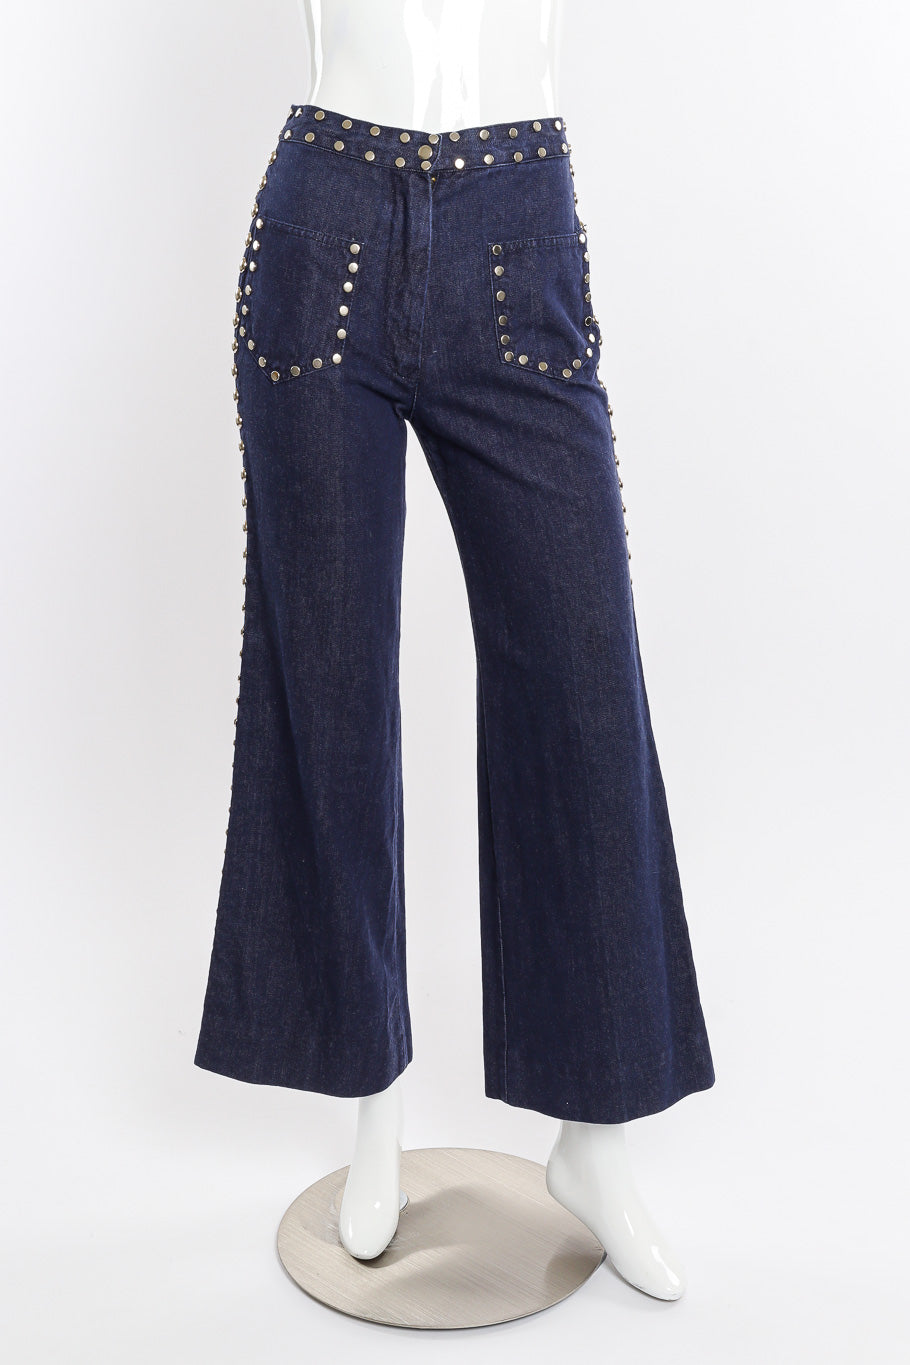 Vintage Allie Flynn Studded Denim Top and Pant Set front view of pants on mannequin @Recessla